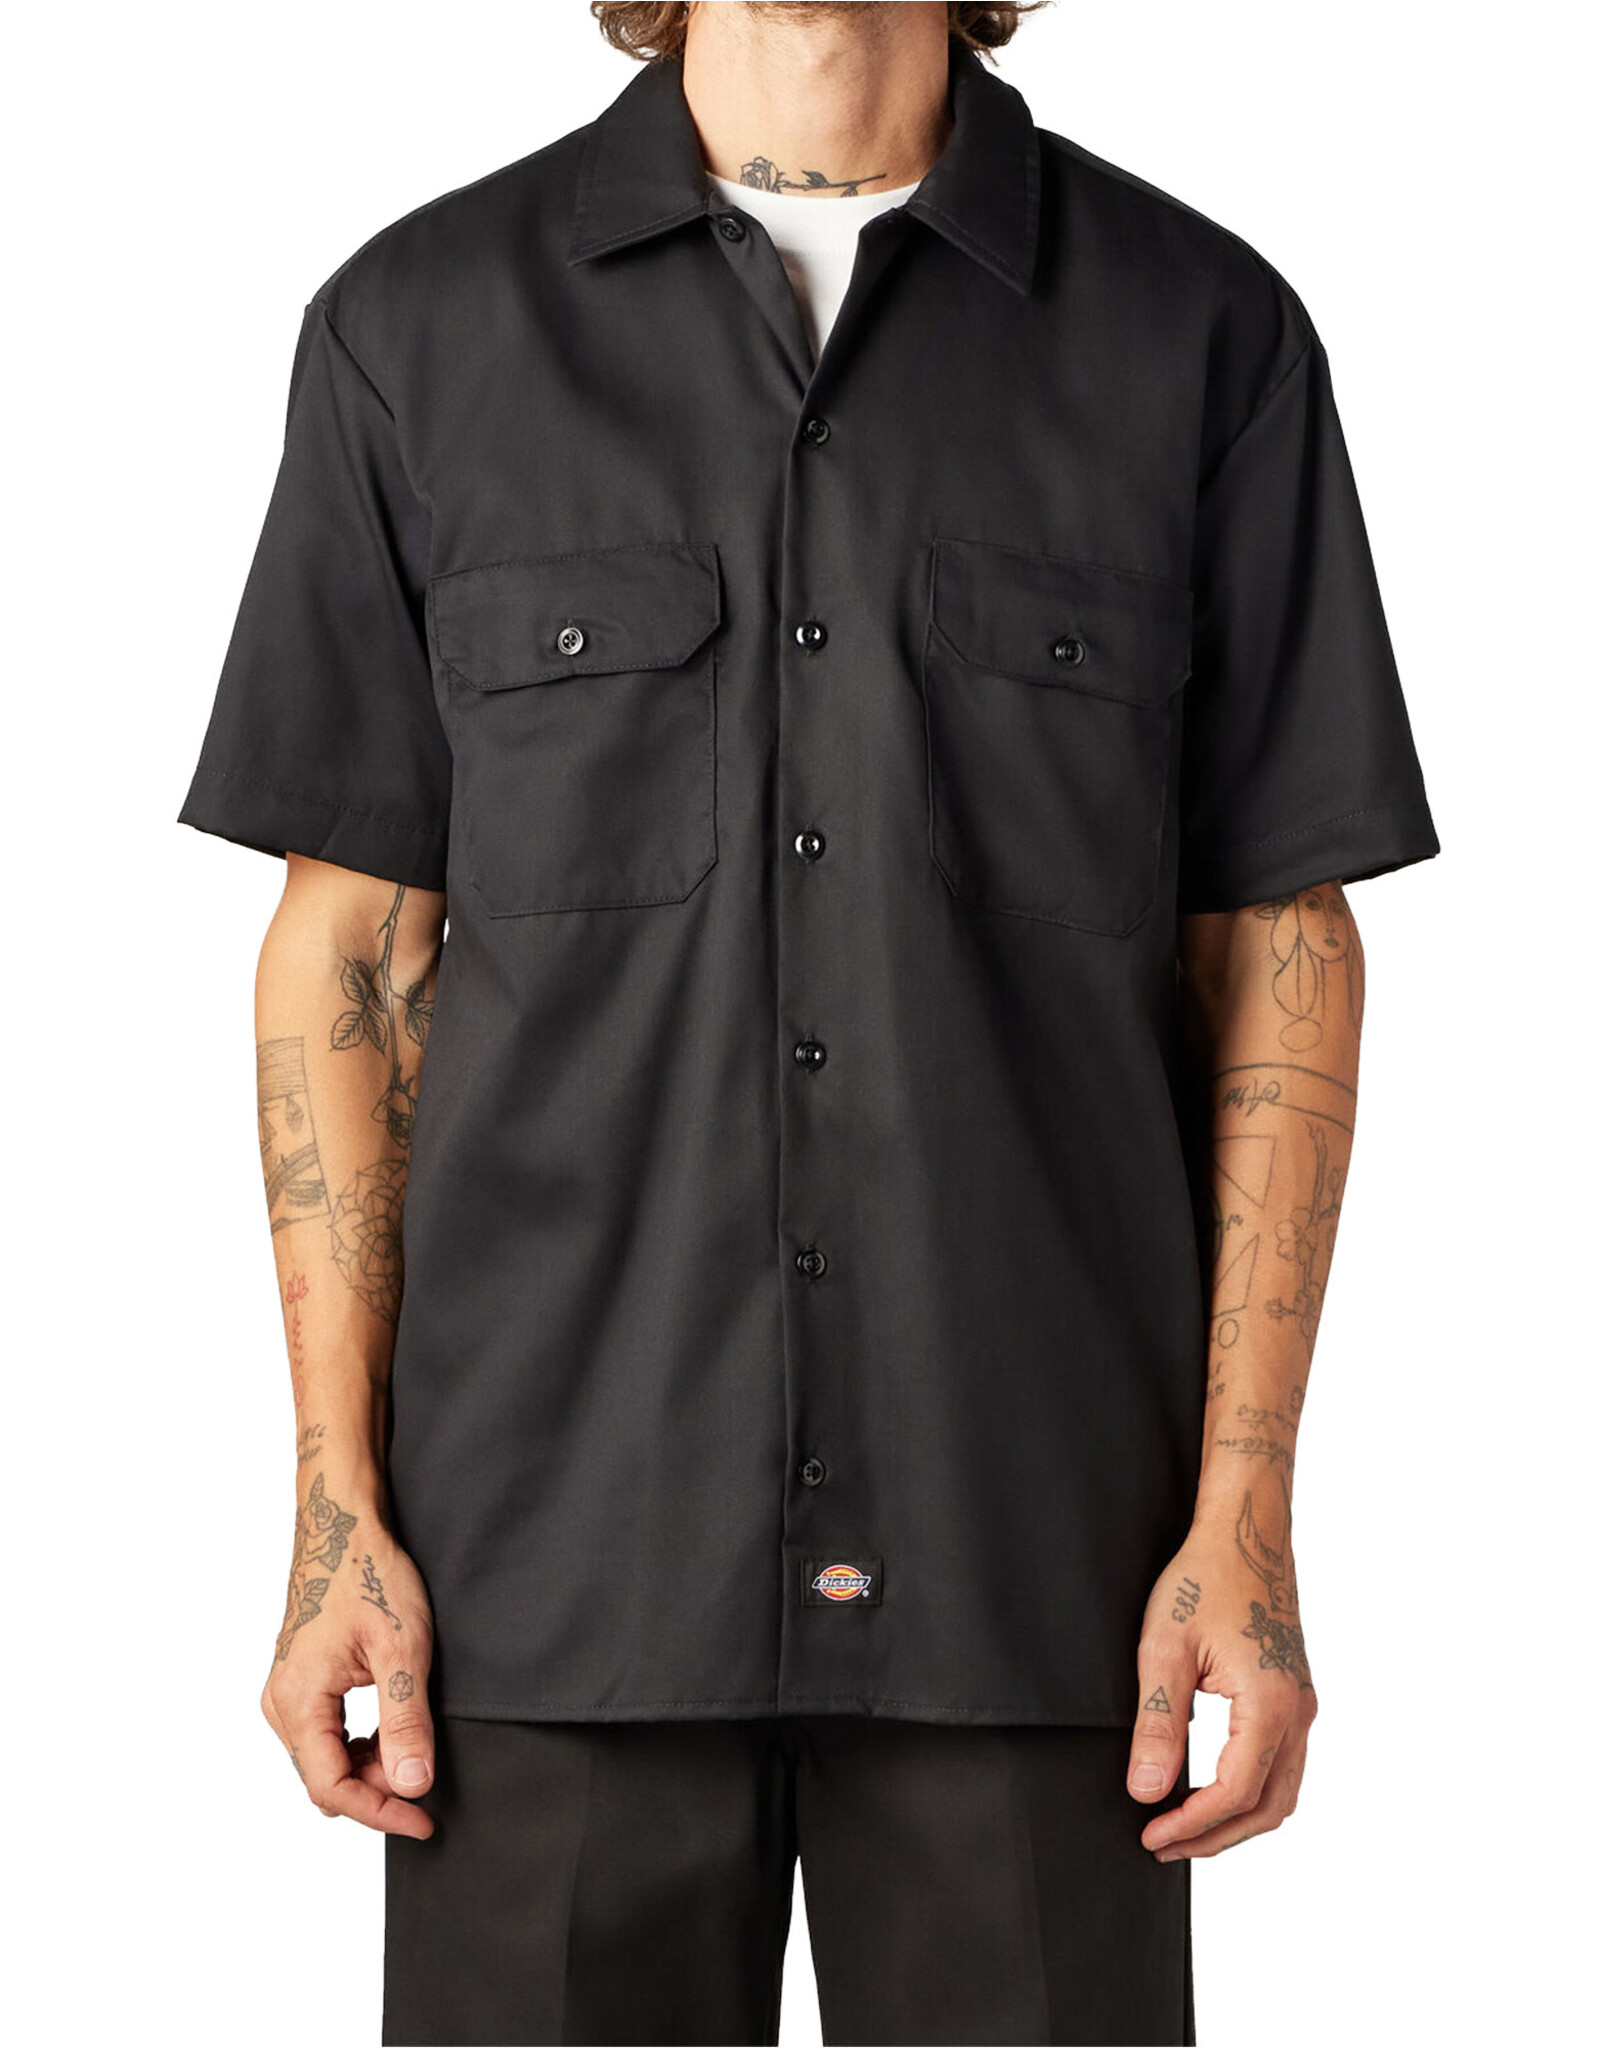 DICKIES Short Sleeve Twill Work Shirt Black - WS675BK